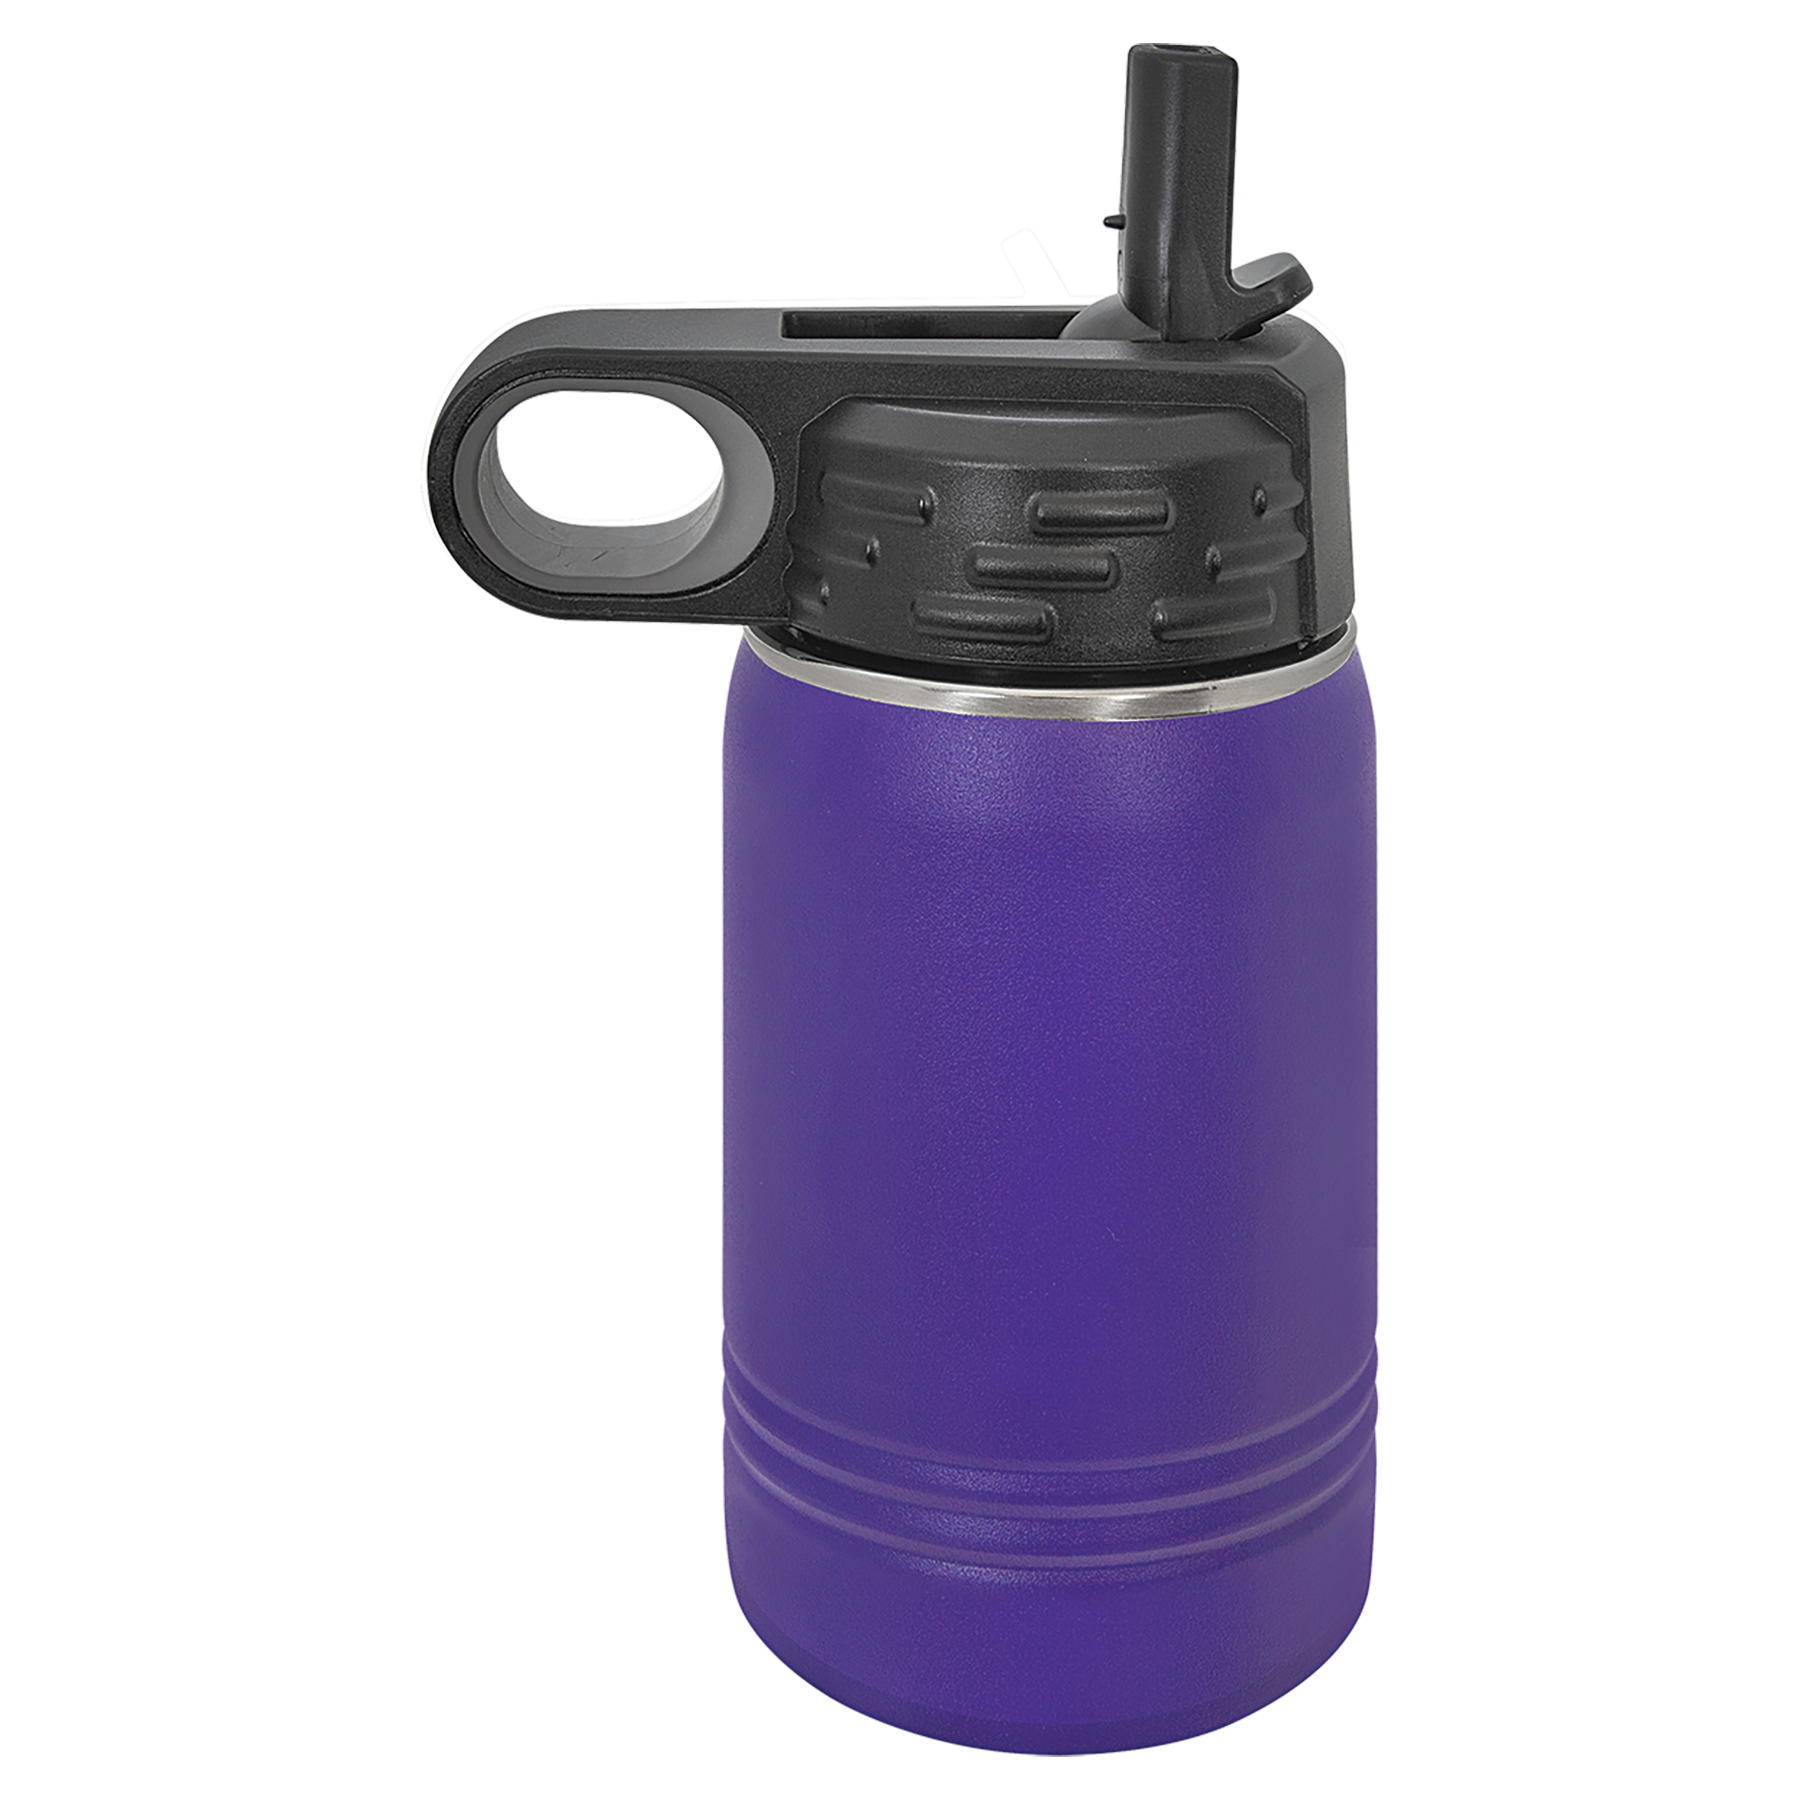 OXO Strv 24 oz Insulated Water Bottle Purple Garnet